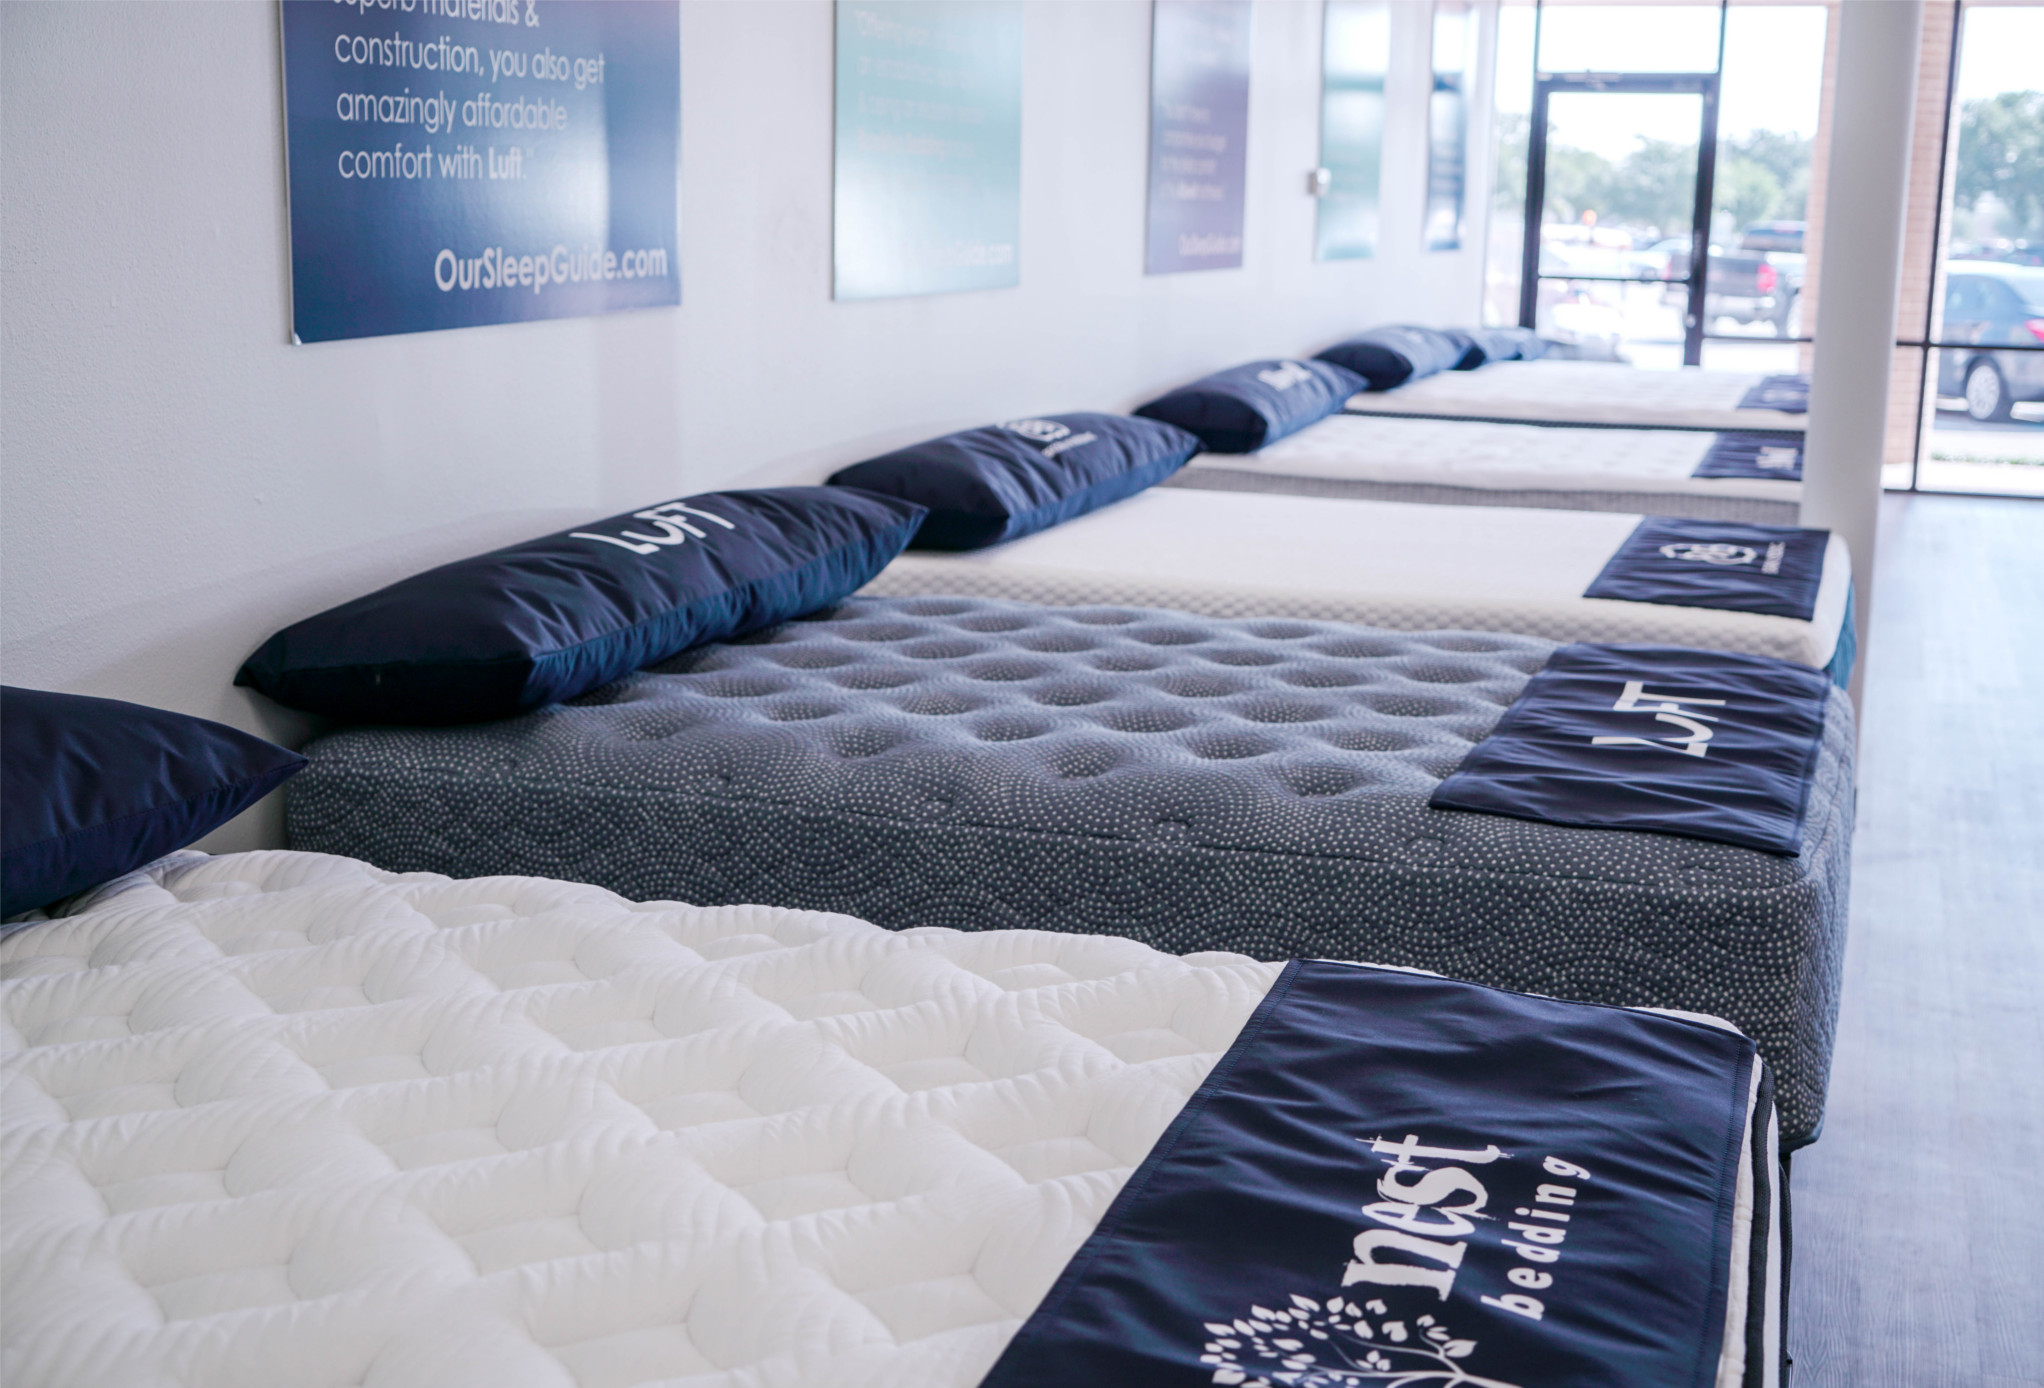 our sleep guide austin mattress showroom